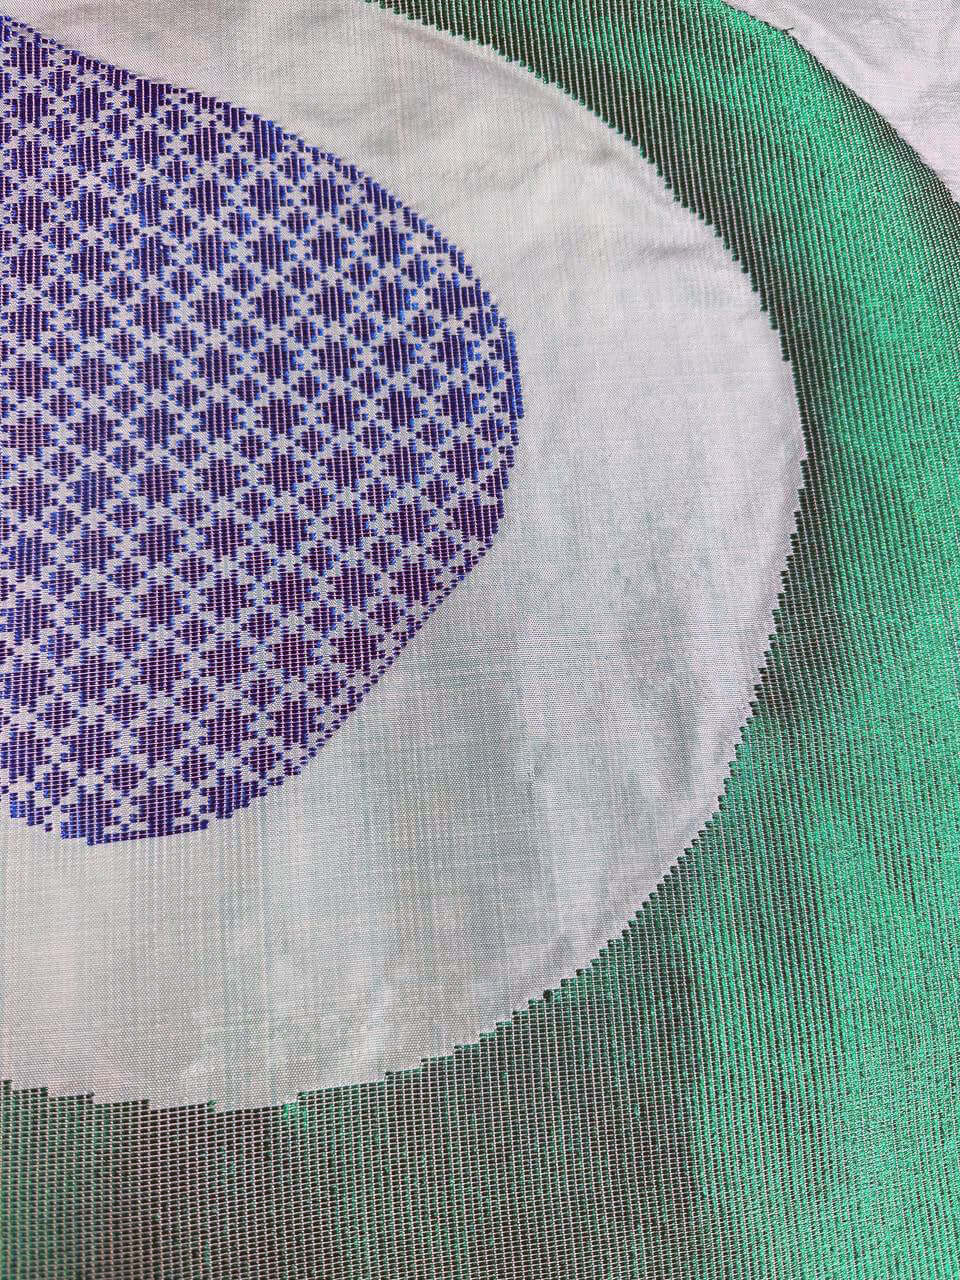 Prophesies Frozen 2(green) handwoven silk songket shawl textile